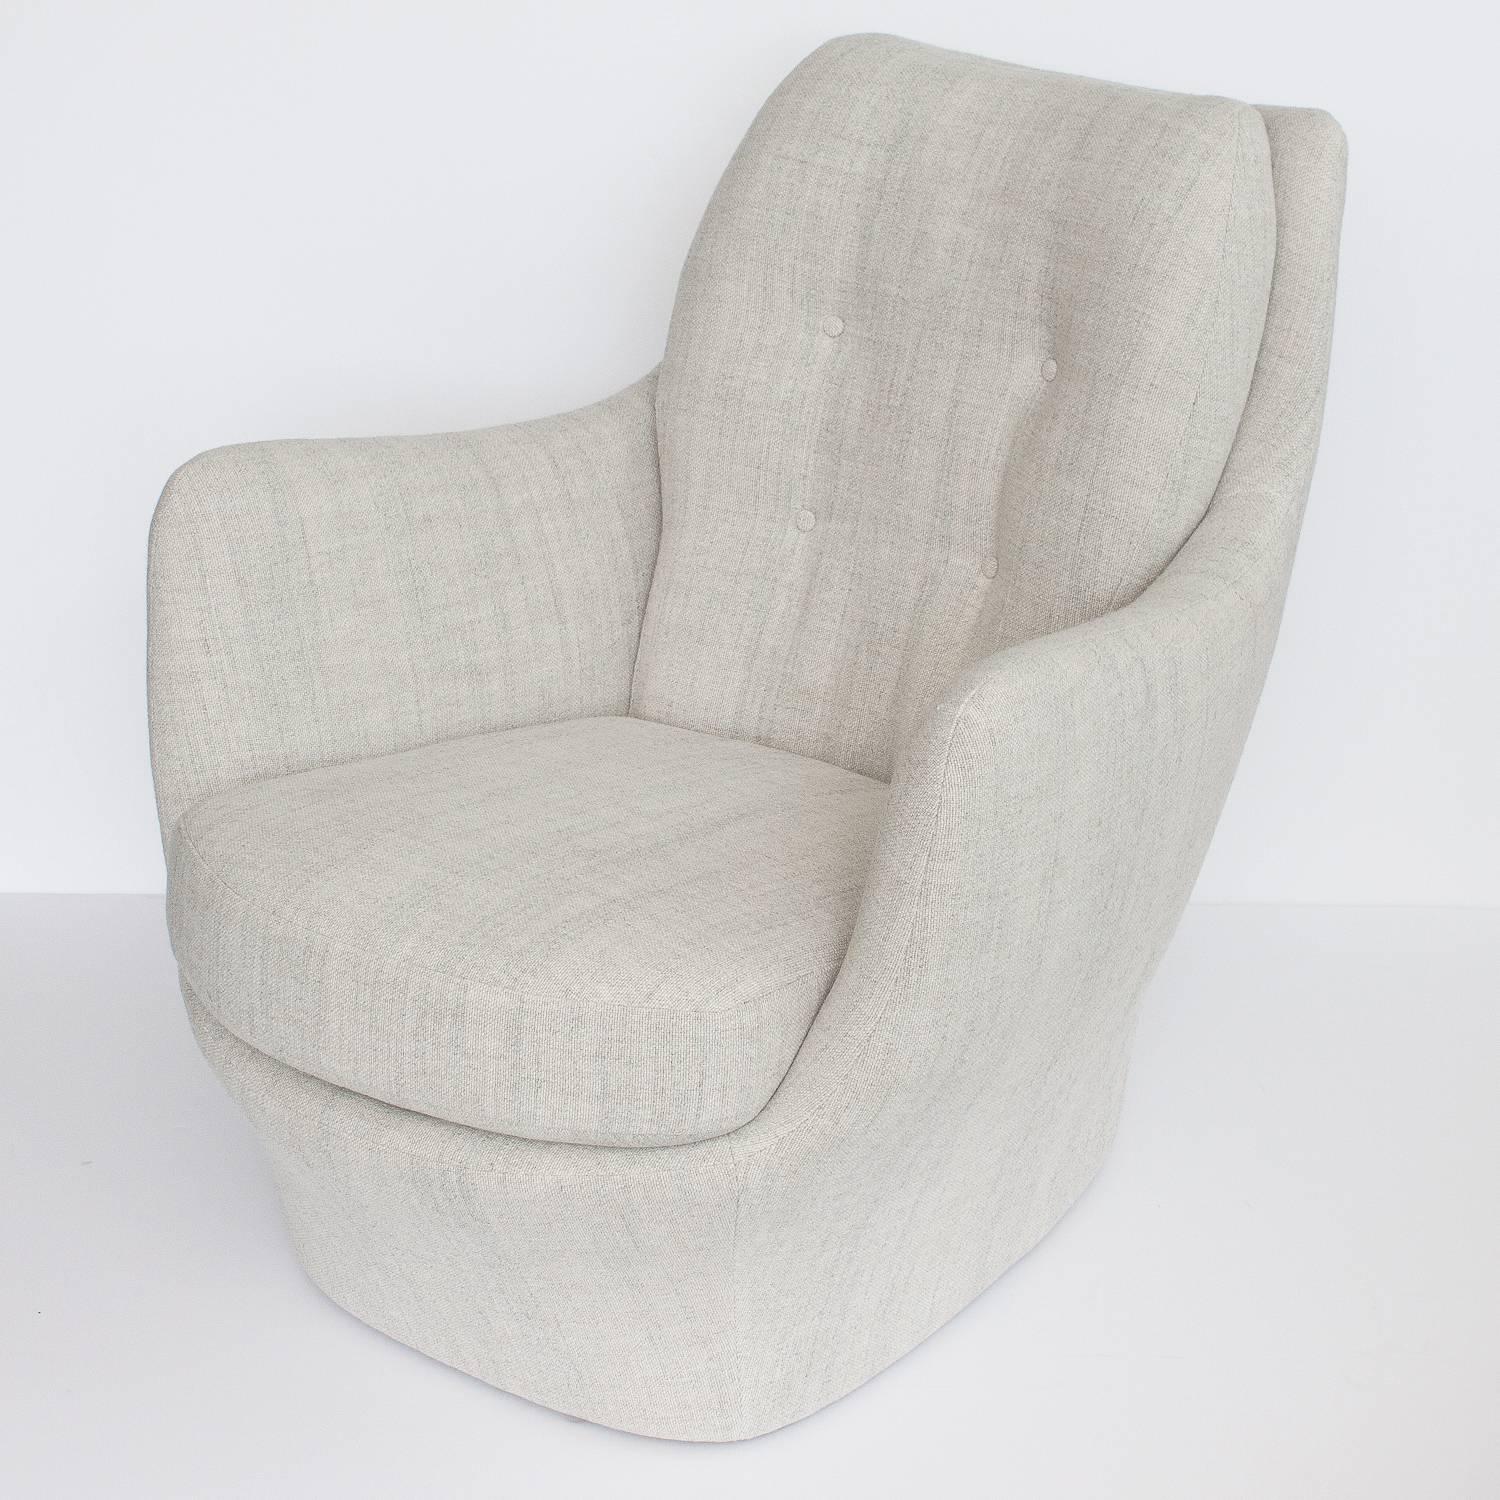 Late 20th Century Milo Baughman Sculptural Lounge Chair and Ottoman